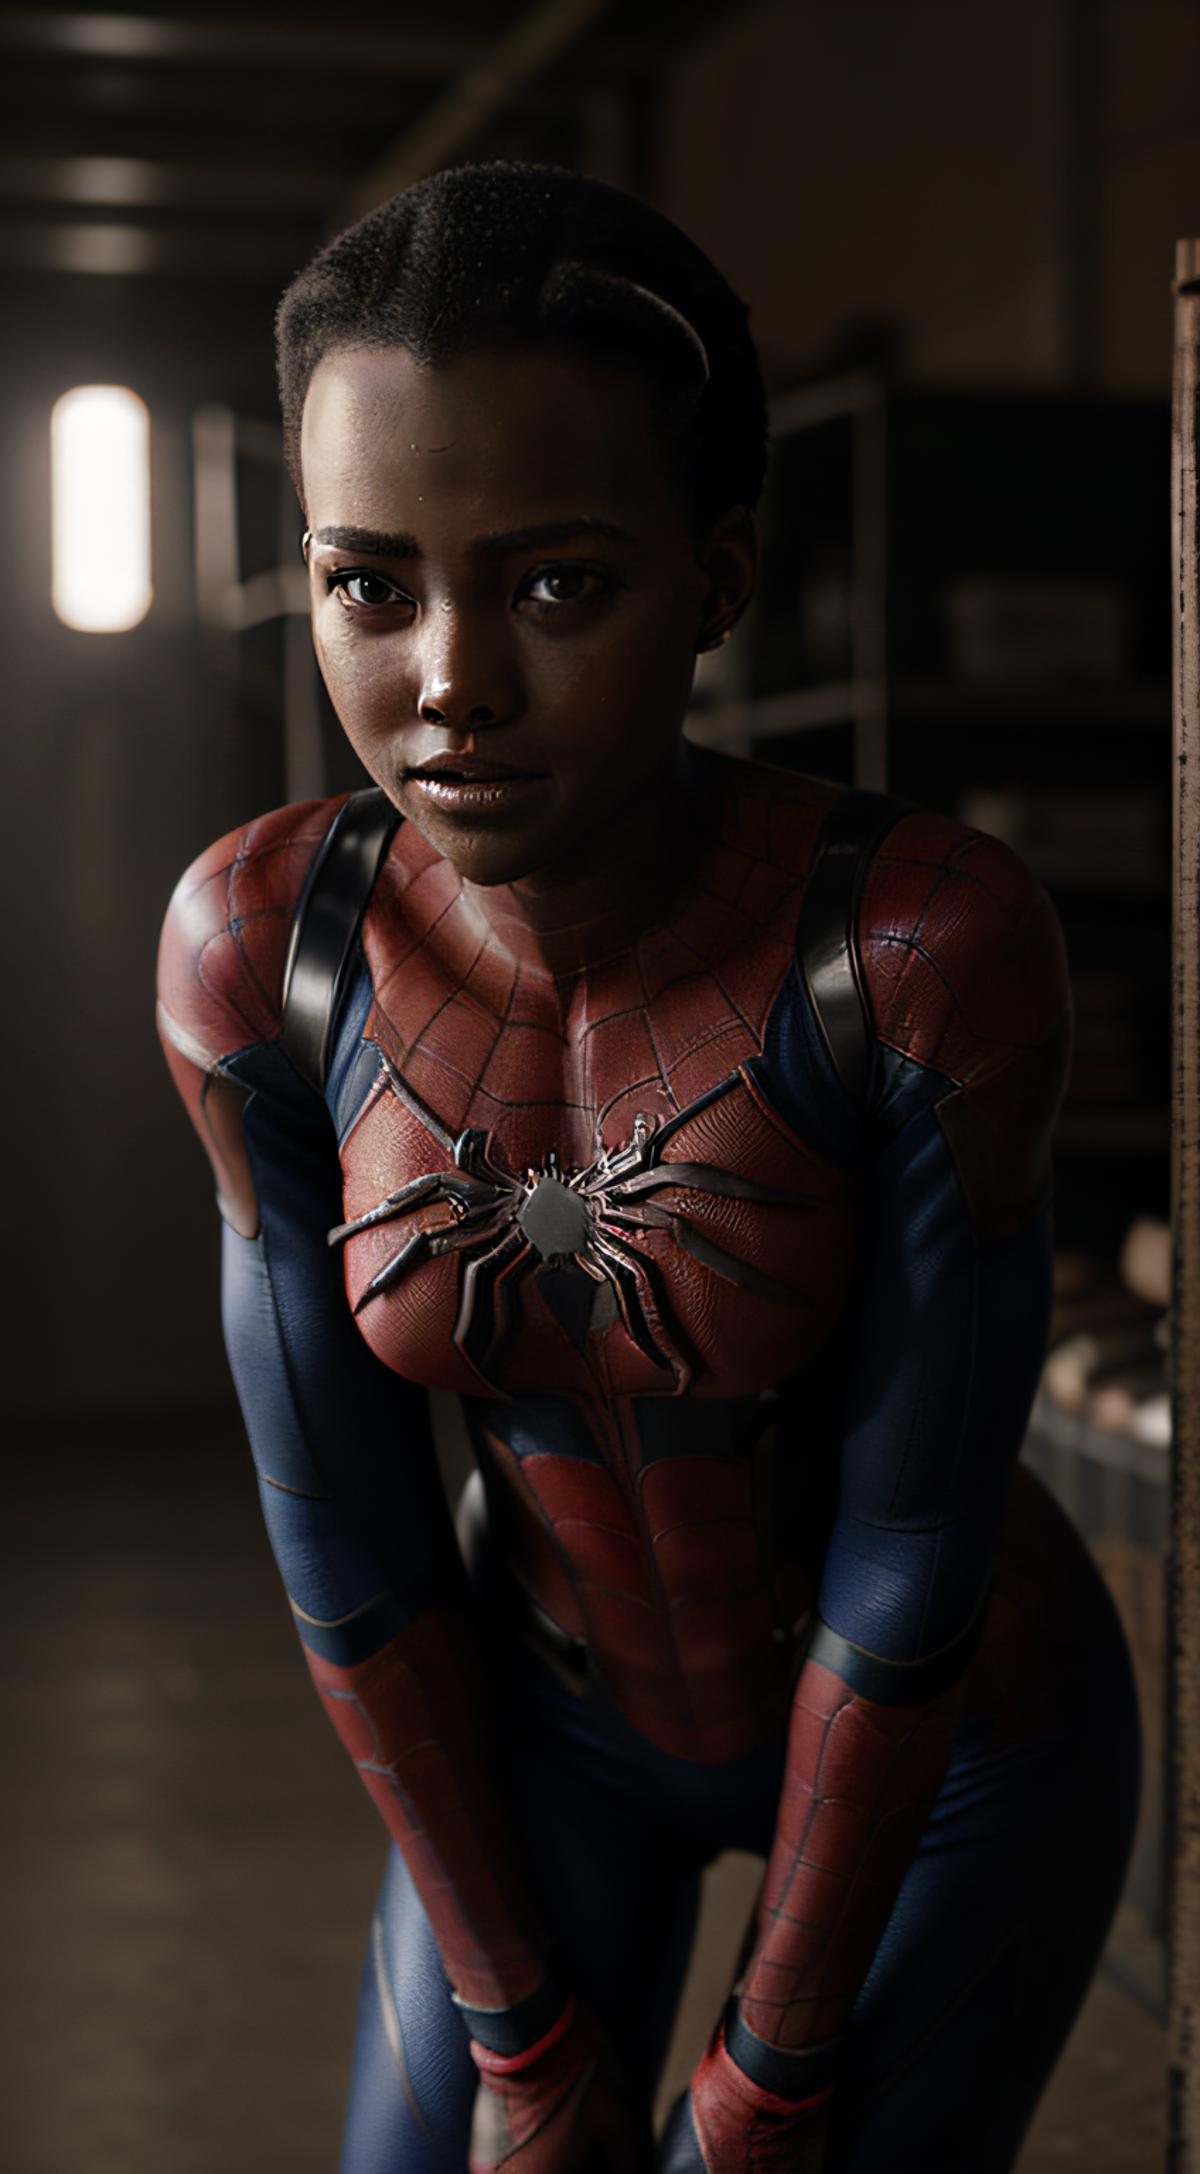 Spider Suit image by markplunder